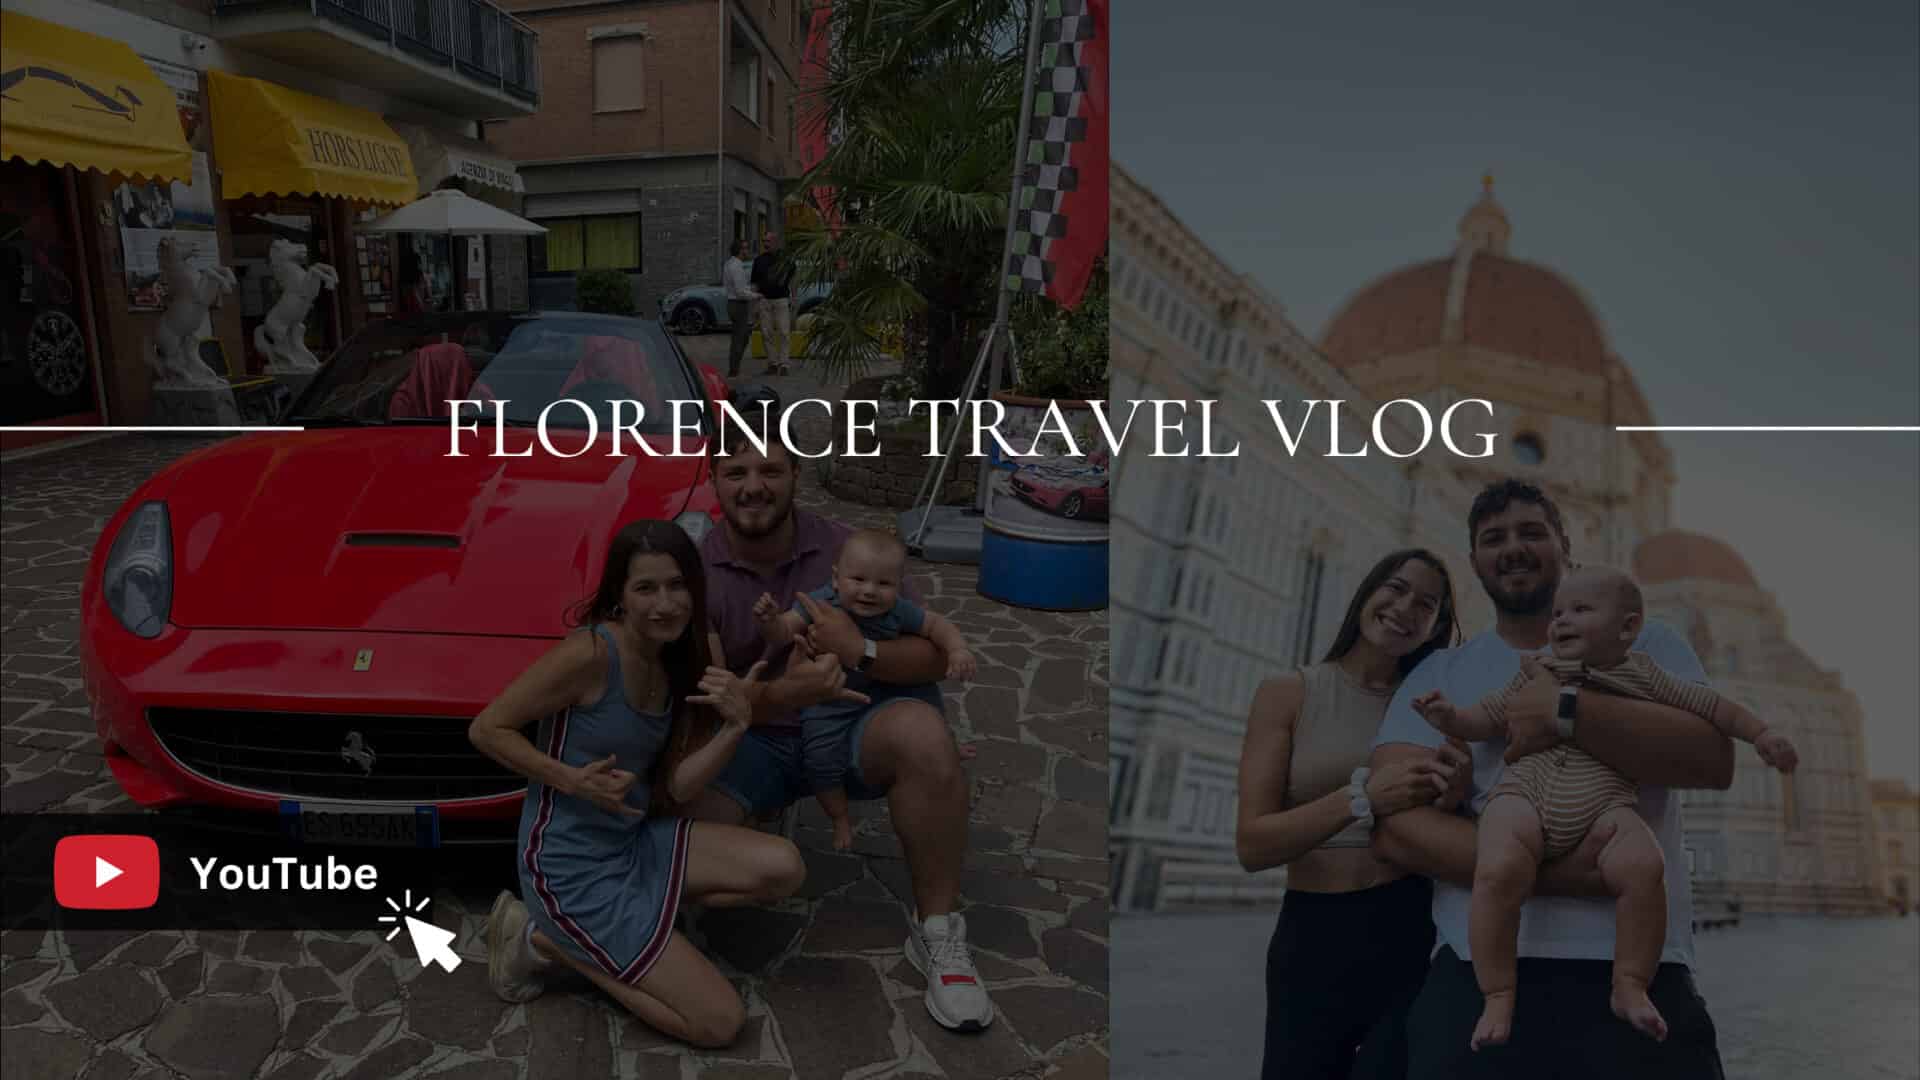 Florence travel vlog youtube thumbnail